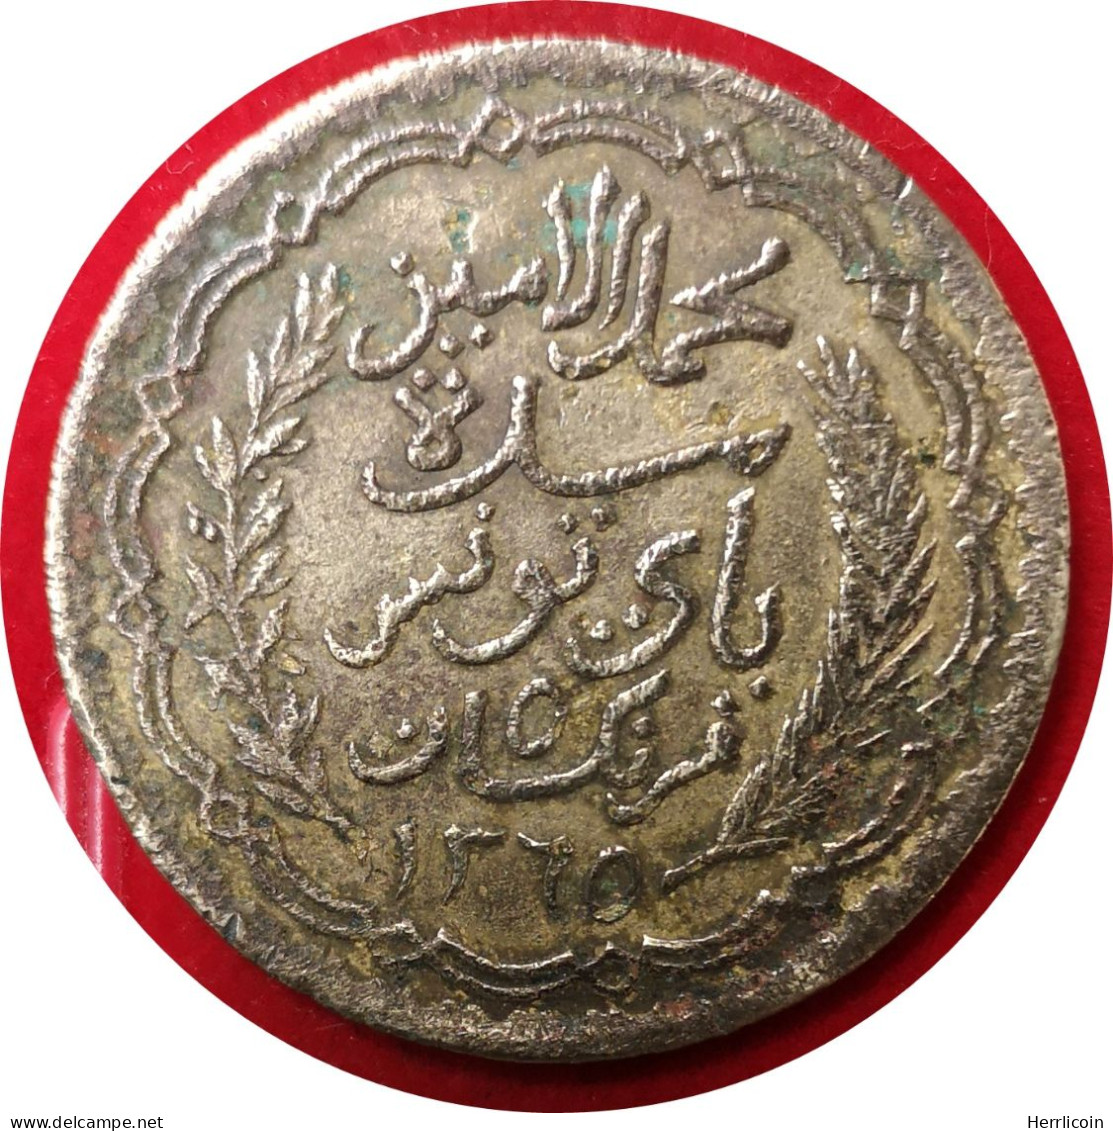 Monnaie Tunisie - 1946 - 5 Francs - Muhammad VIII Al-Amin Protectorat Français - Tunisia